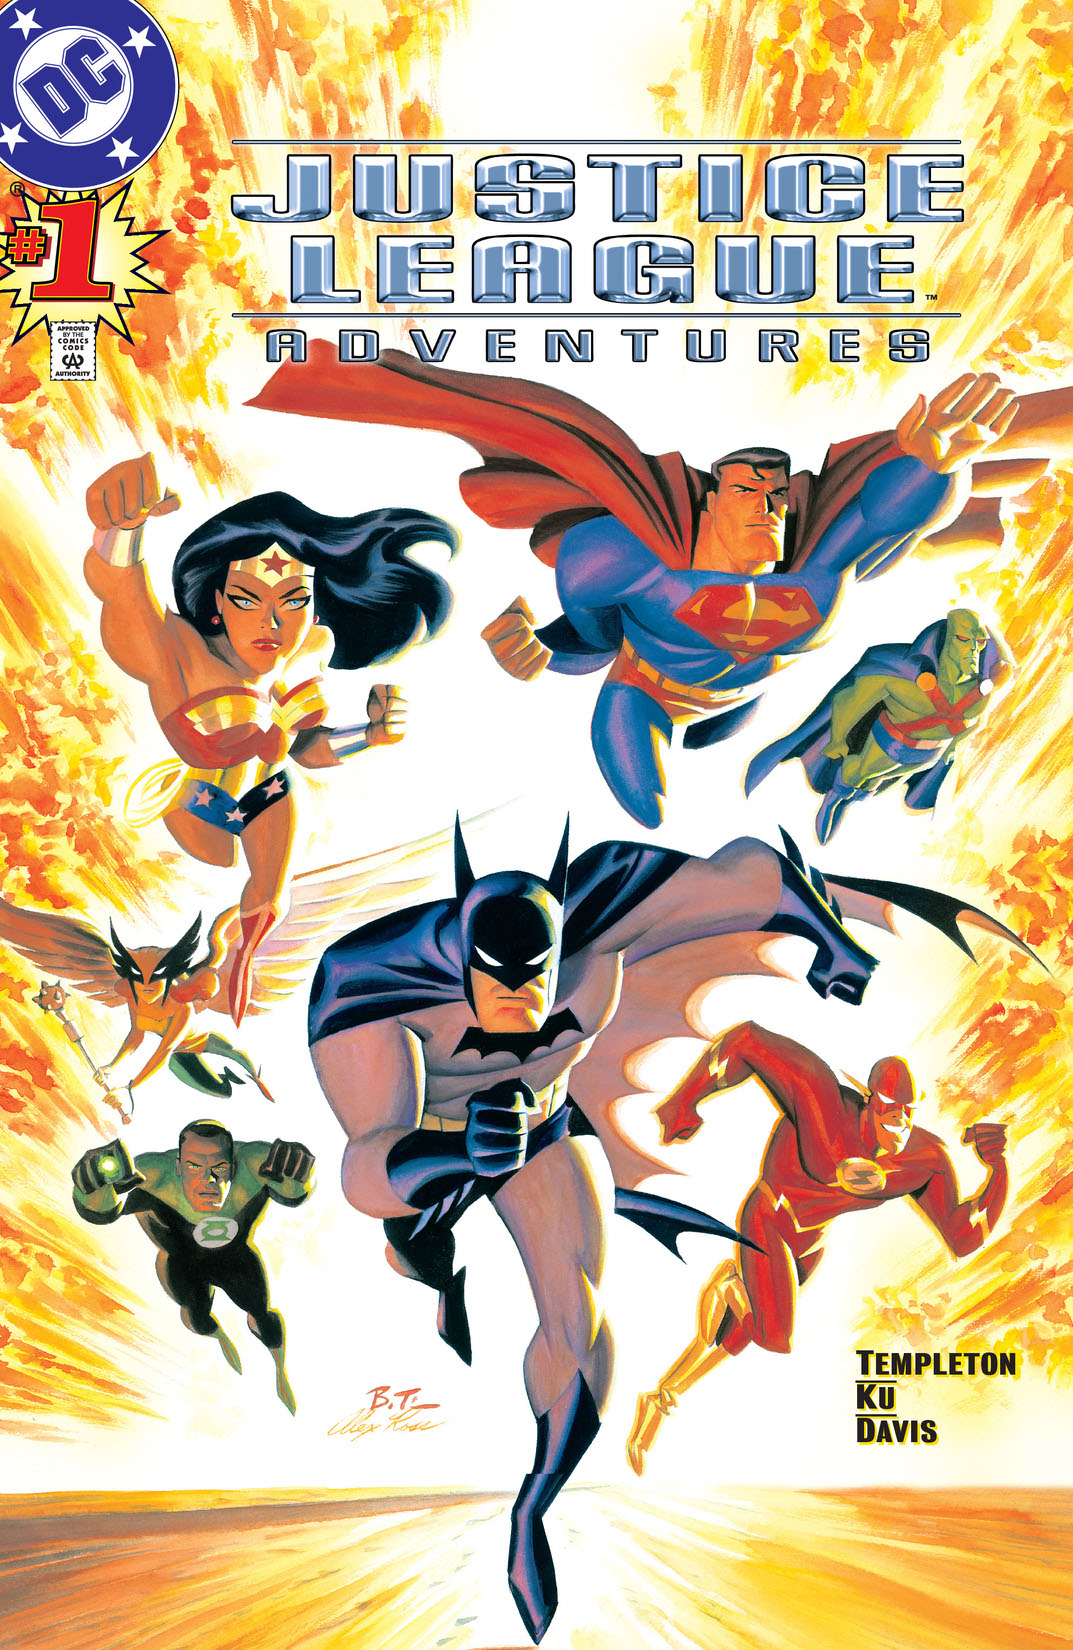 Justice League Adventures #1 preview images